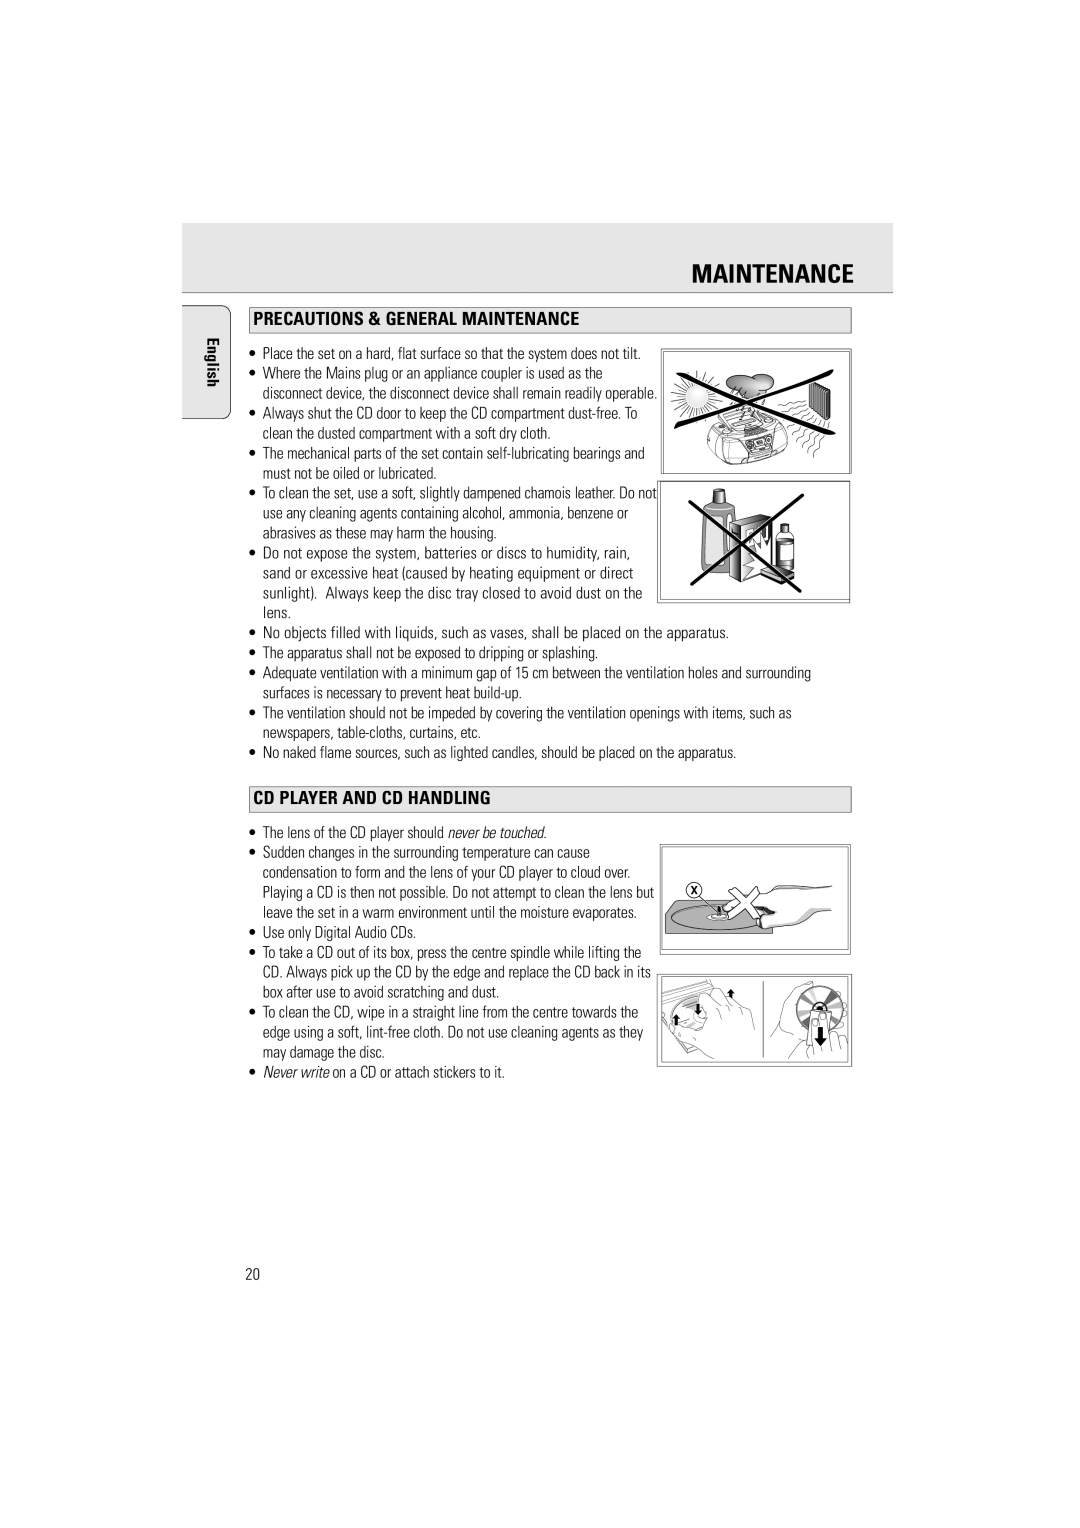 Philips AZ5160 user manual Precautions & General Maintenance, Cd Player And Cd Handling 